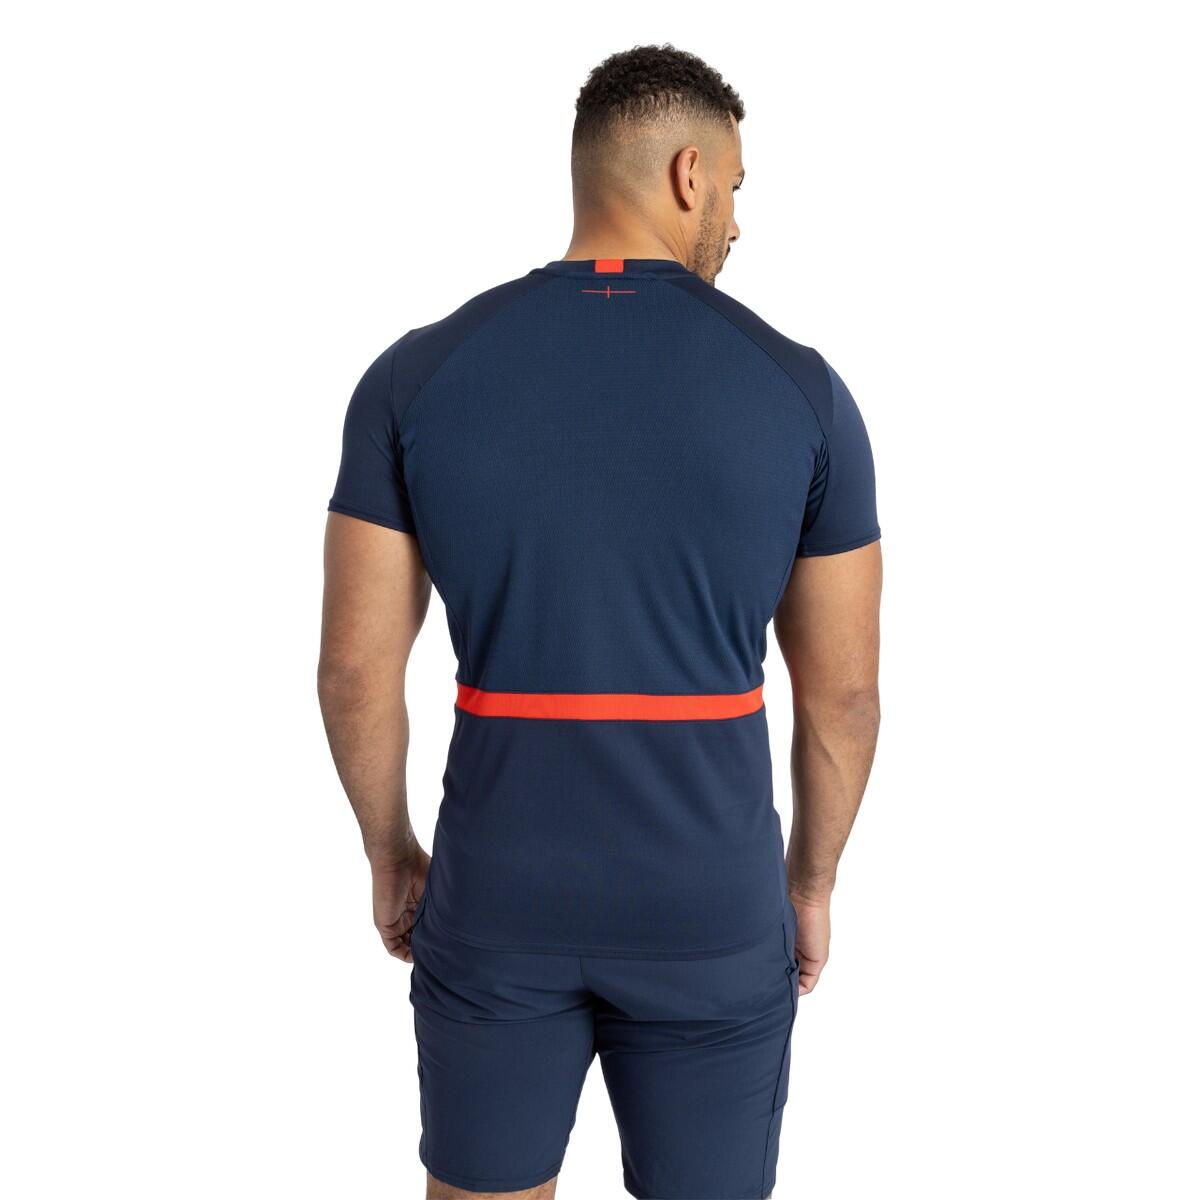 Mens 23/24 England Rugby Gym TShirt (Navy Blazer/Dress Blue/Flame Scarlet) 2/4